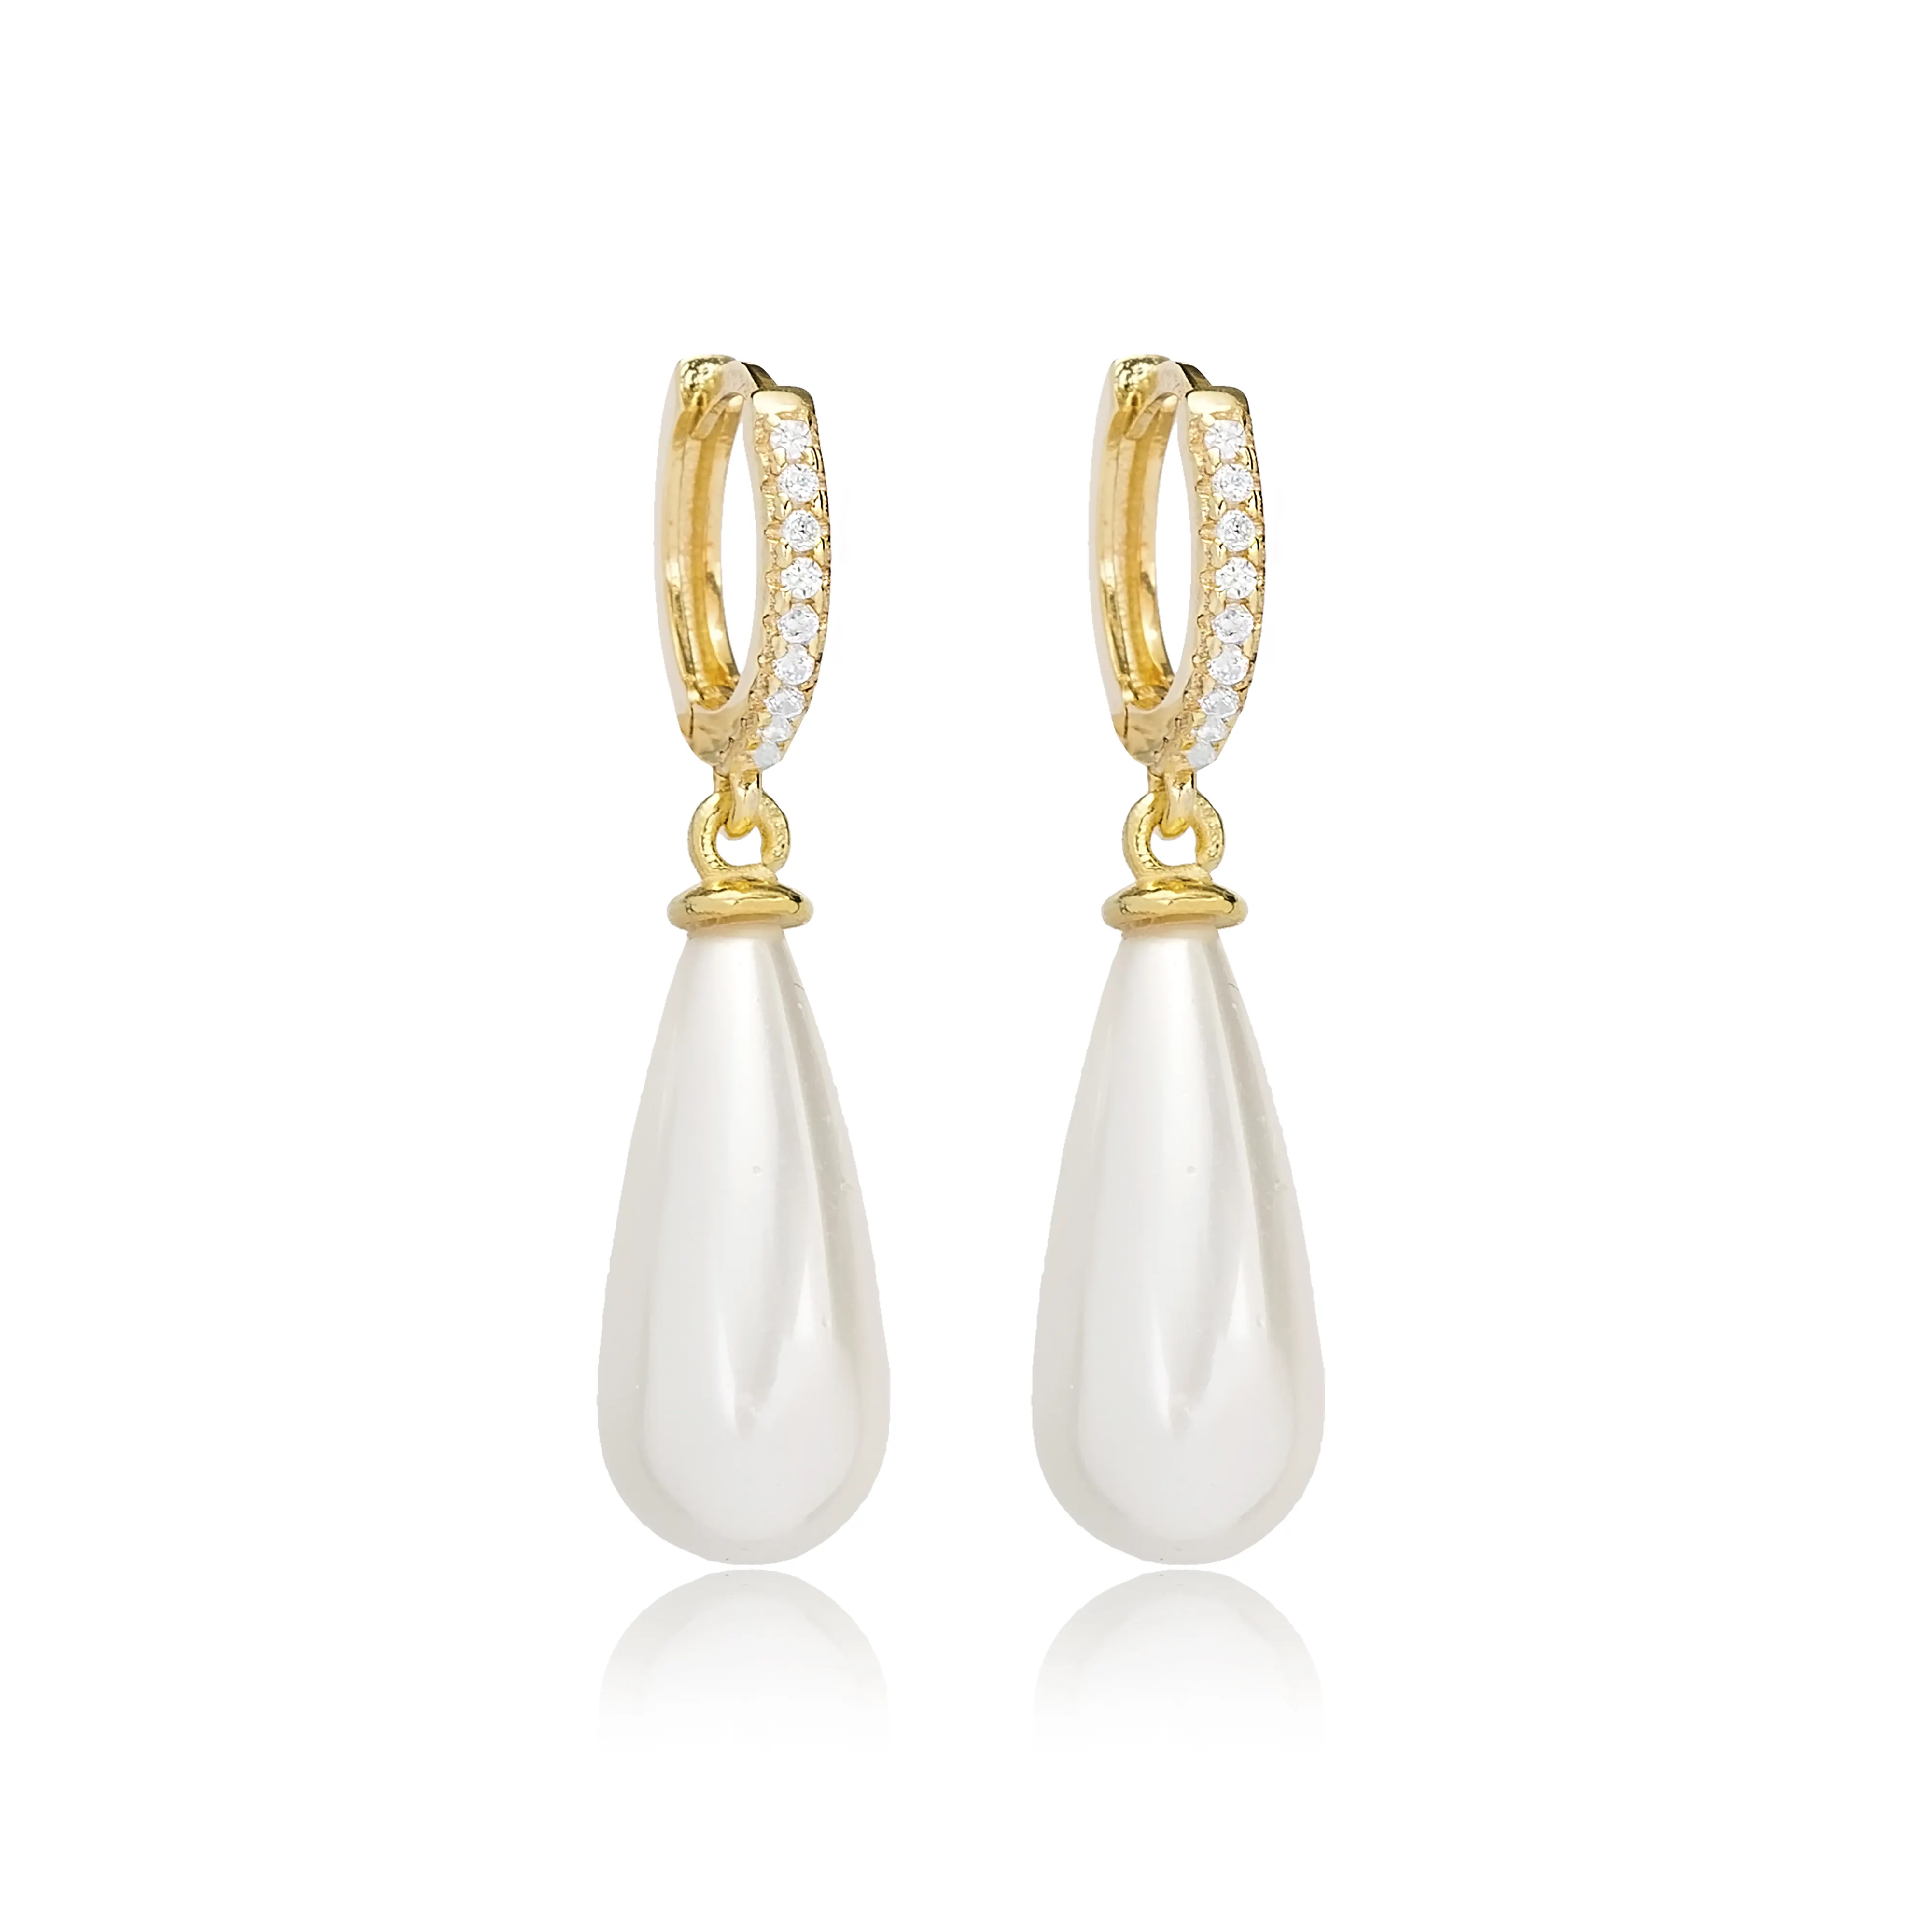 Boucles d'oreilles en or 14k, Design de perles avec pierre de Zircon, fabrication artisanale turque, vente en gros, bijoux 585